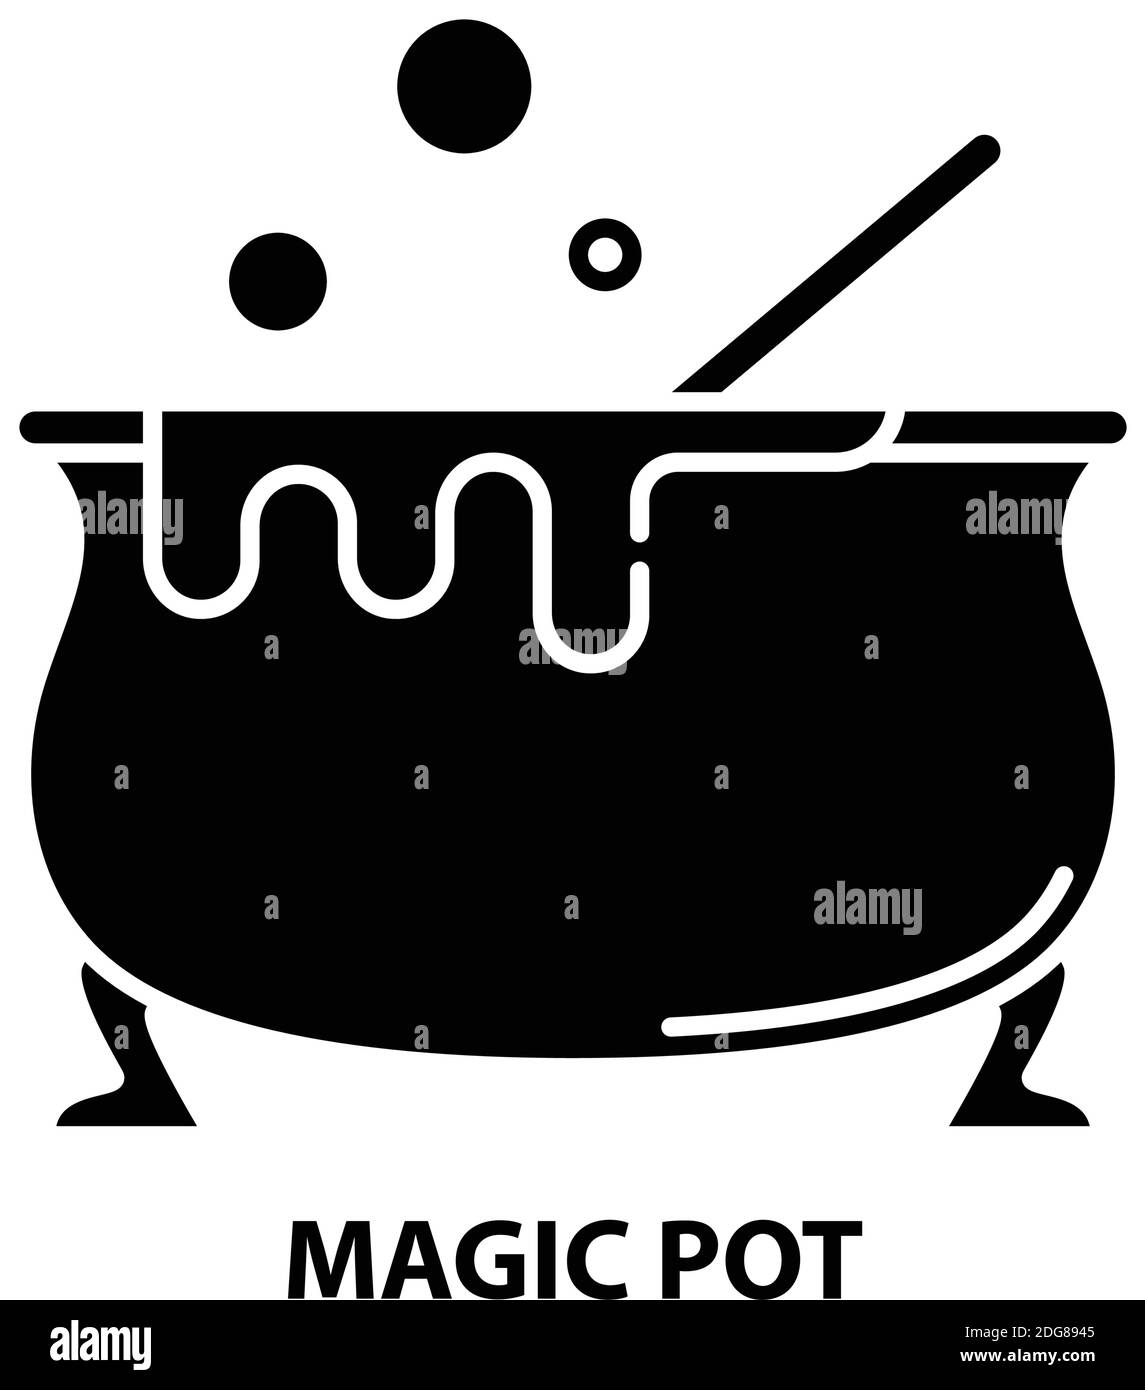 https://c8.alamy.com/comp/2DG8945/magic-pot-icon-black-vector-sign-with-editable-strokes-concept-illustration-2DG8945.jpg